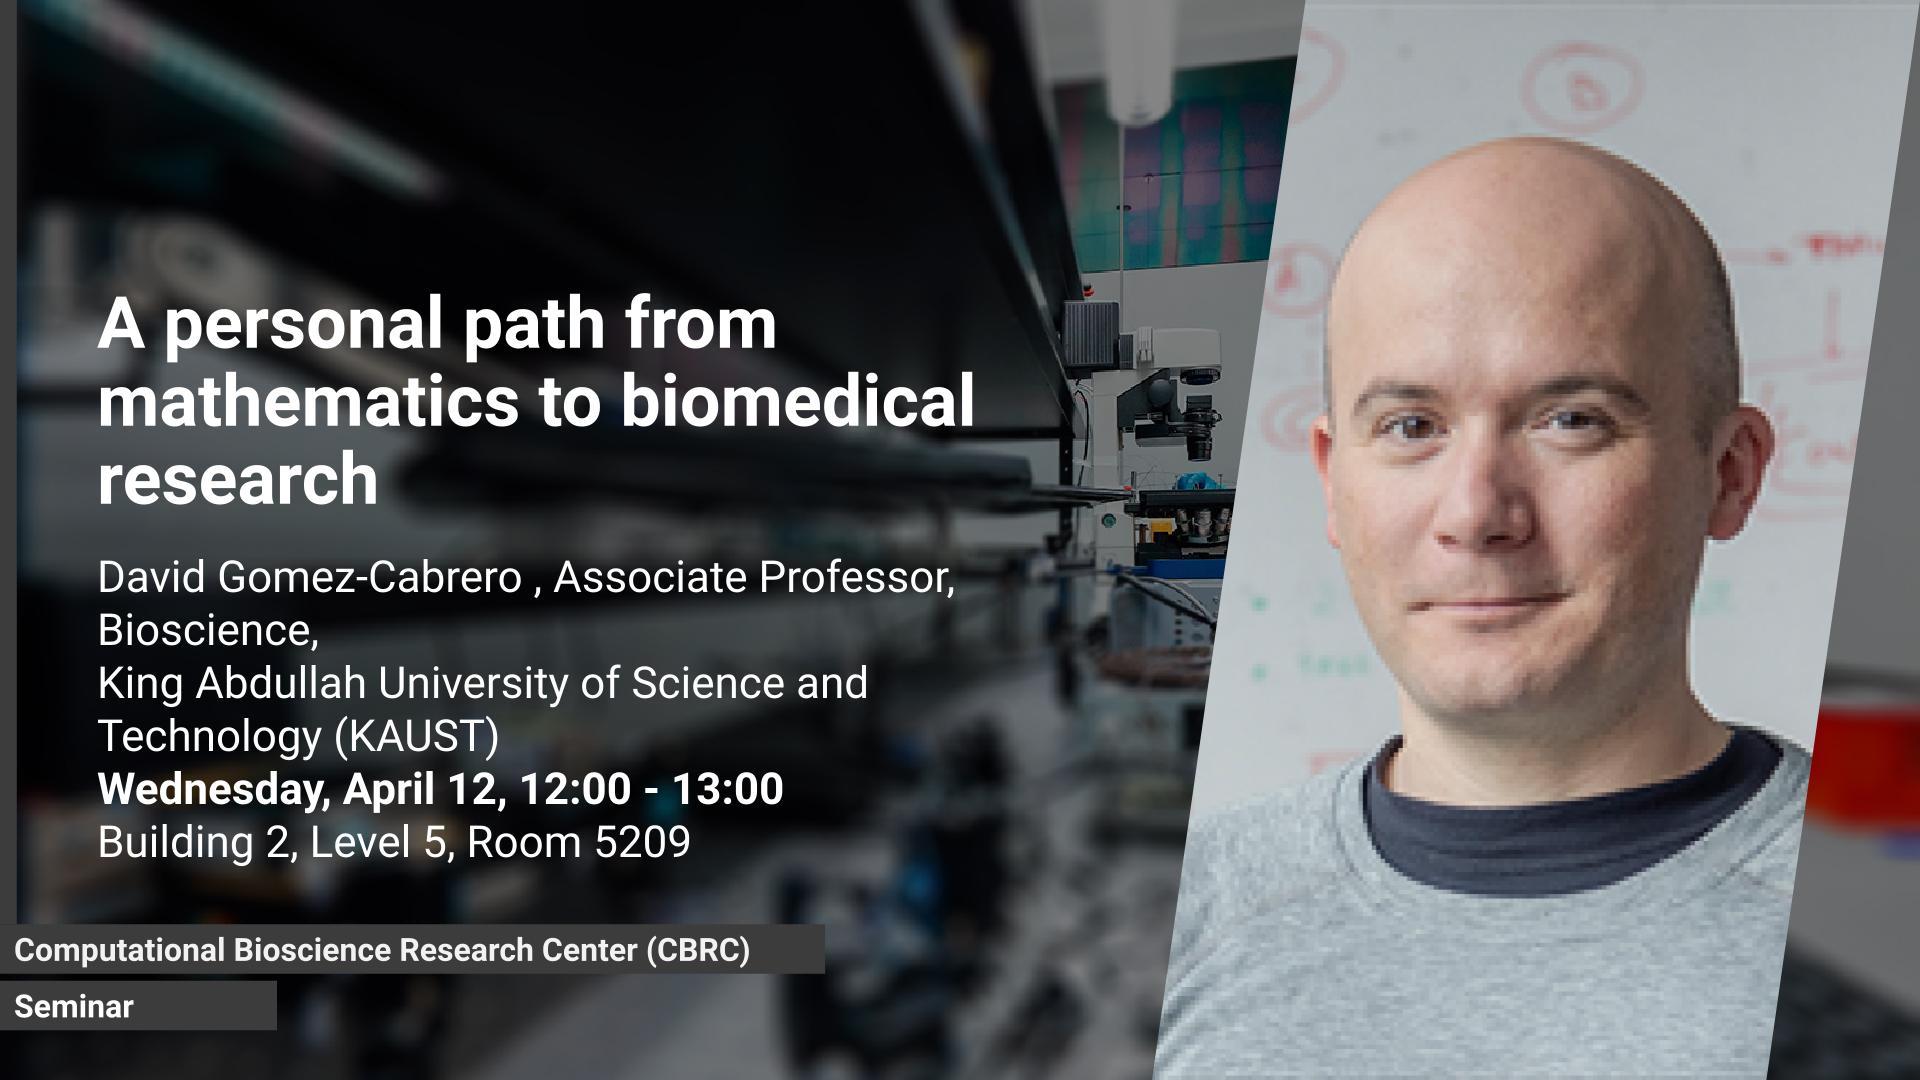 CBRC Seminar:  "A personal path from mathematics to biomedical research" by David Gomez-Cabrero 